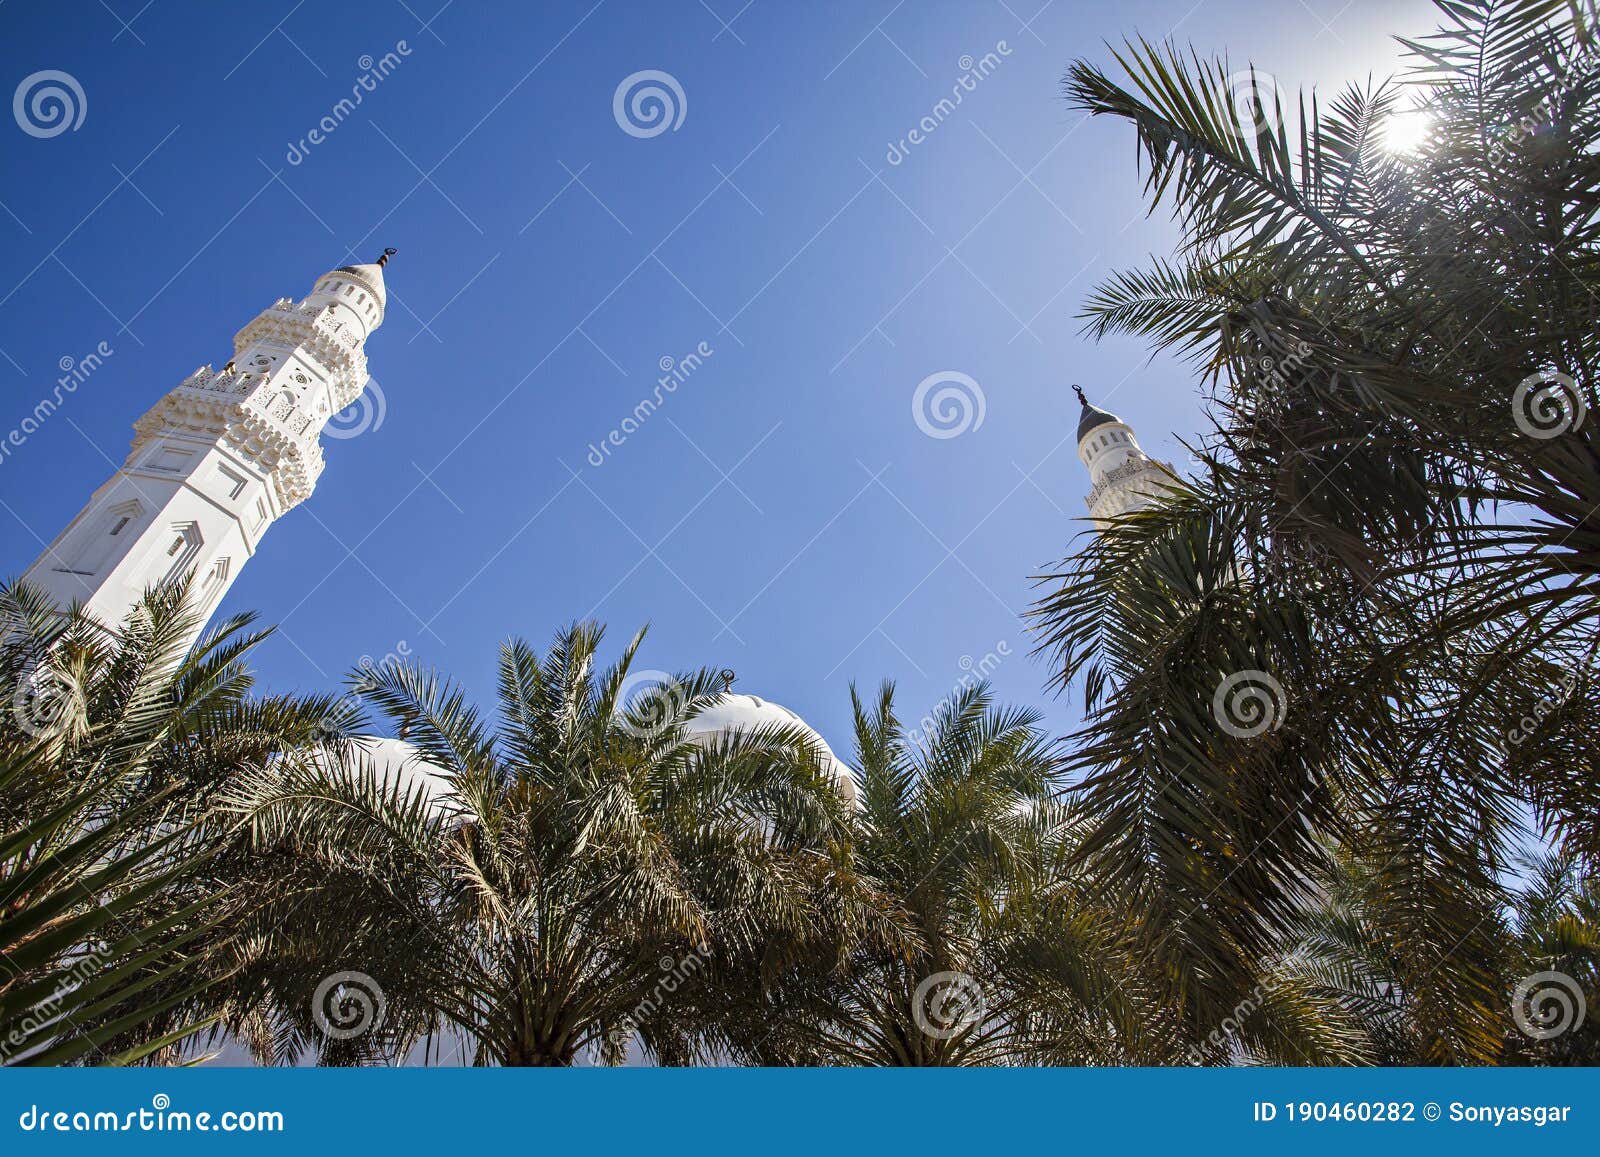 quba / kuba mosque, the first mosque that built by prophet muhammad in medina, saudi arabia.